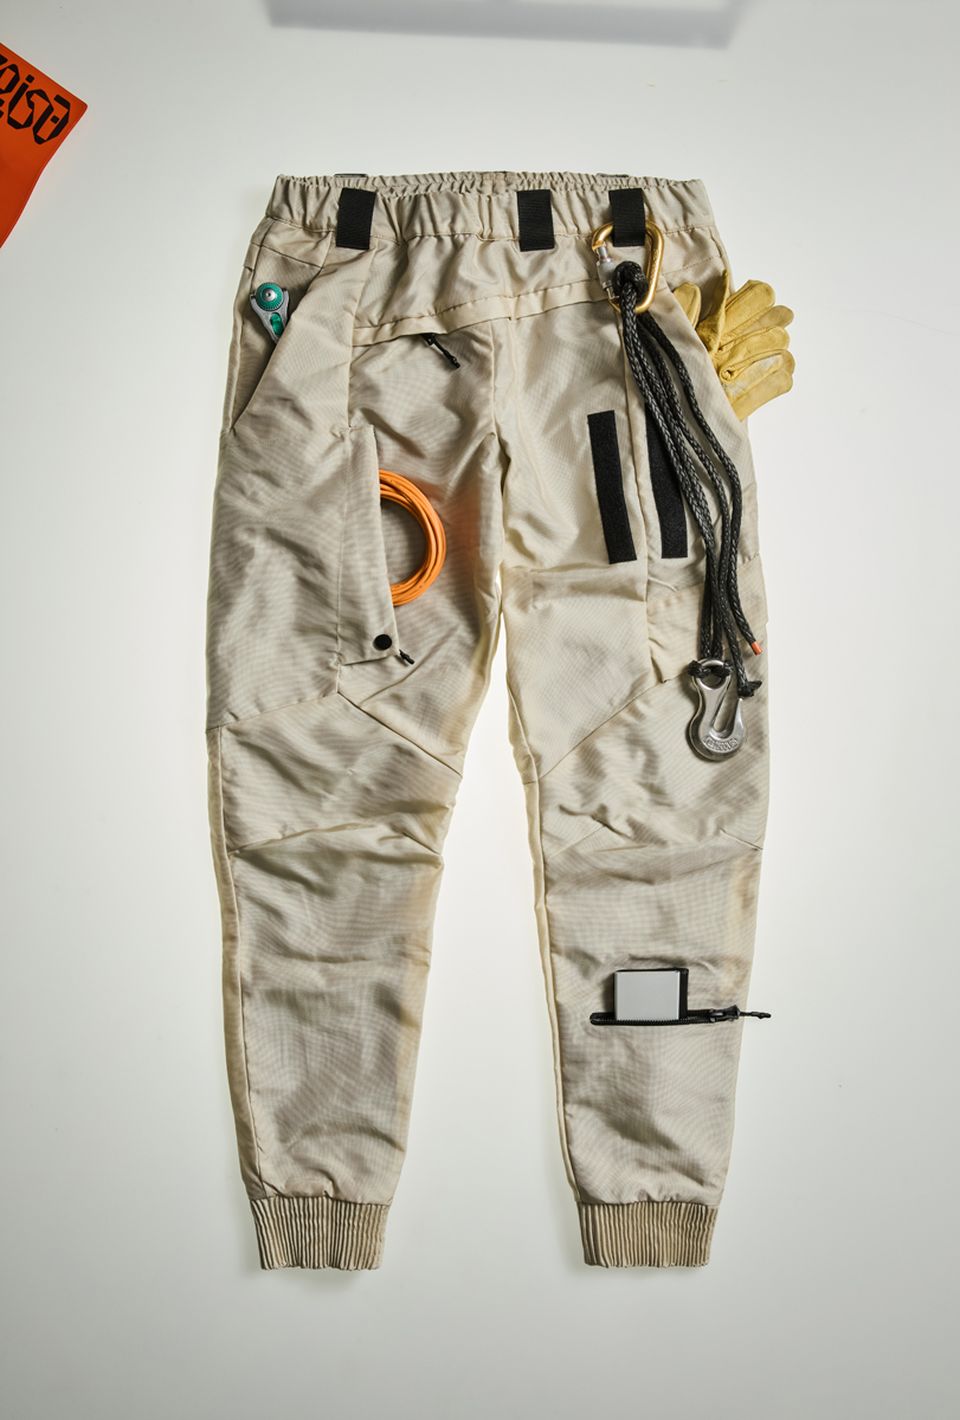 Vollebak's Mars Jacket & Pants Outdress 'Dune's Costumes